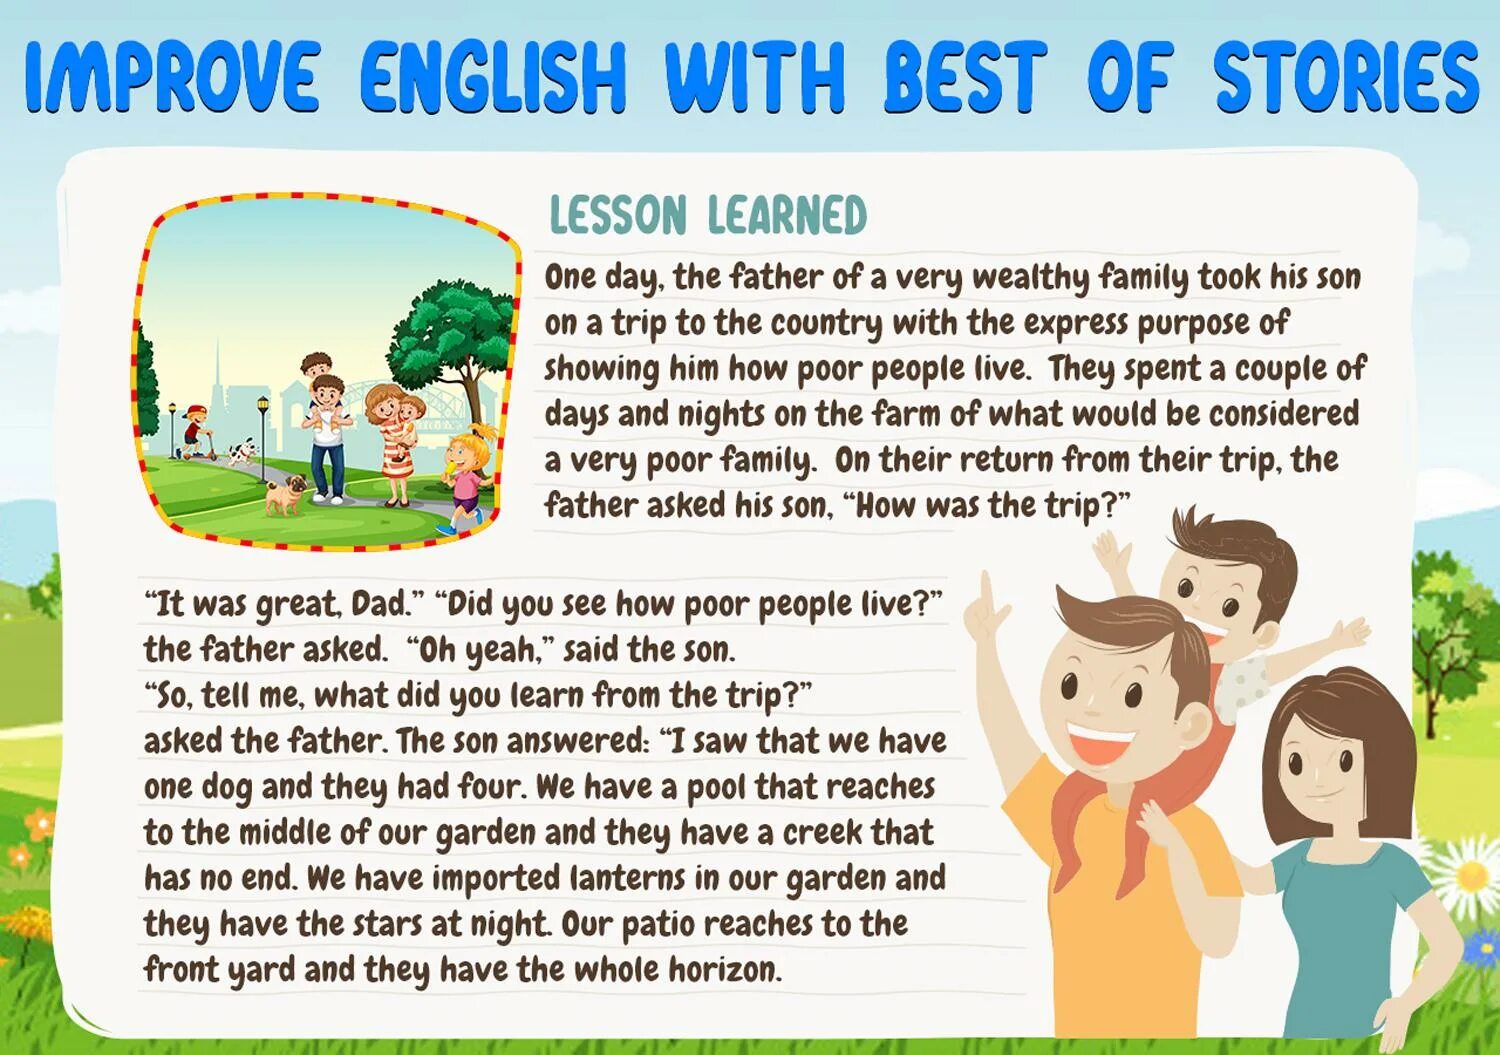 Short stories in English. Short stories for Kids. Stories for children in English. Topics in English книга.